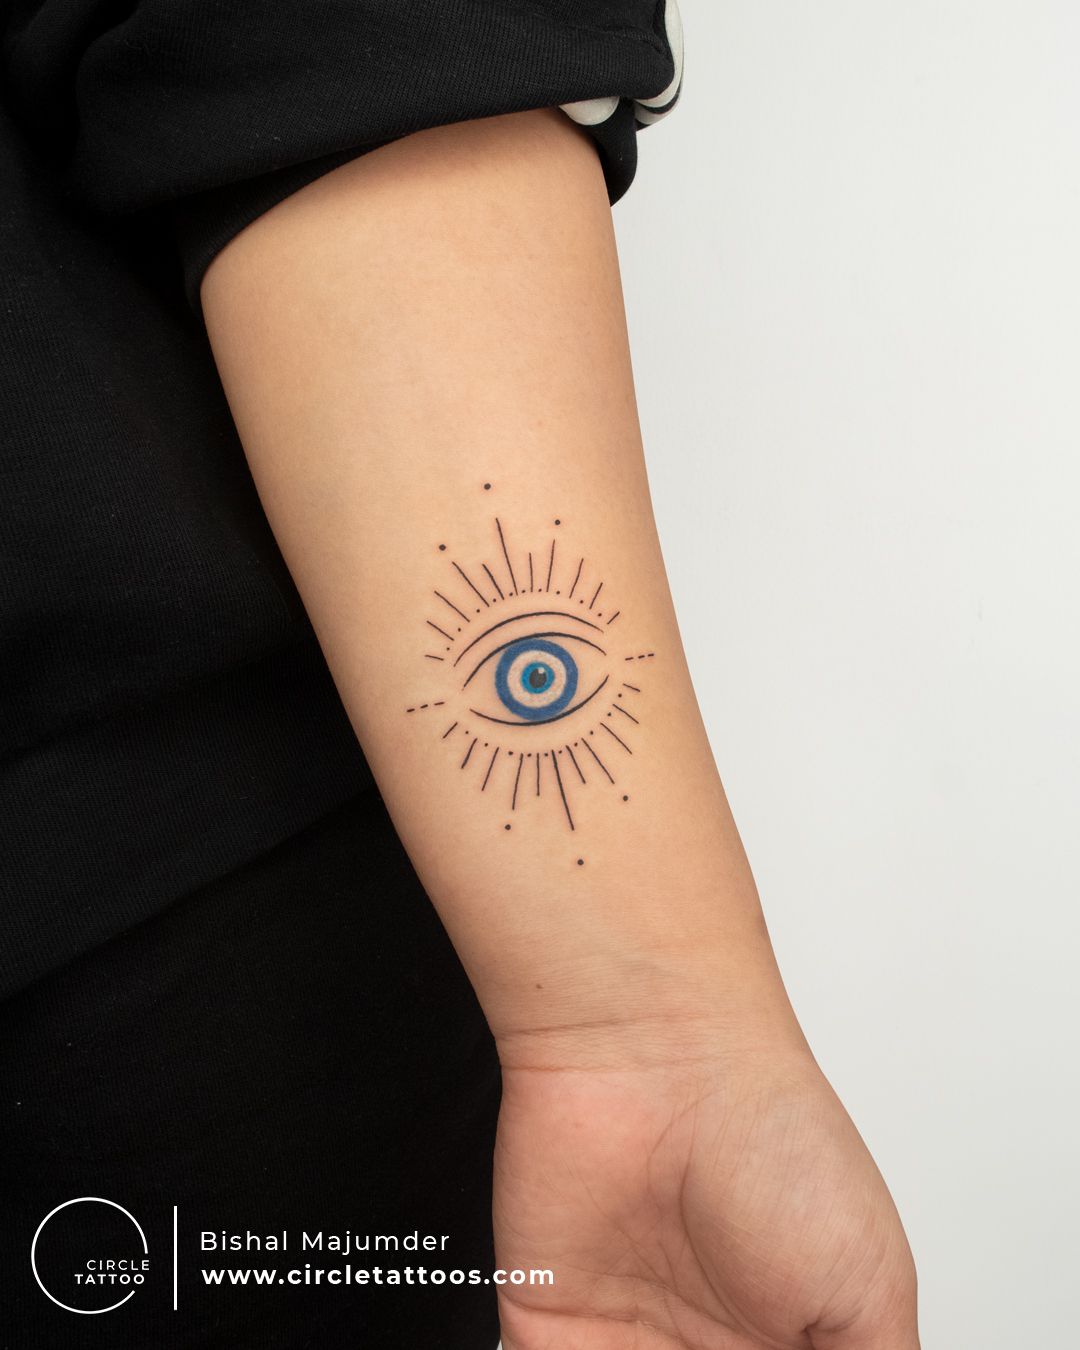 Evil eye tattoo located on the wrist minimalistic